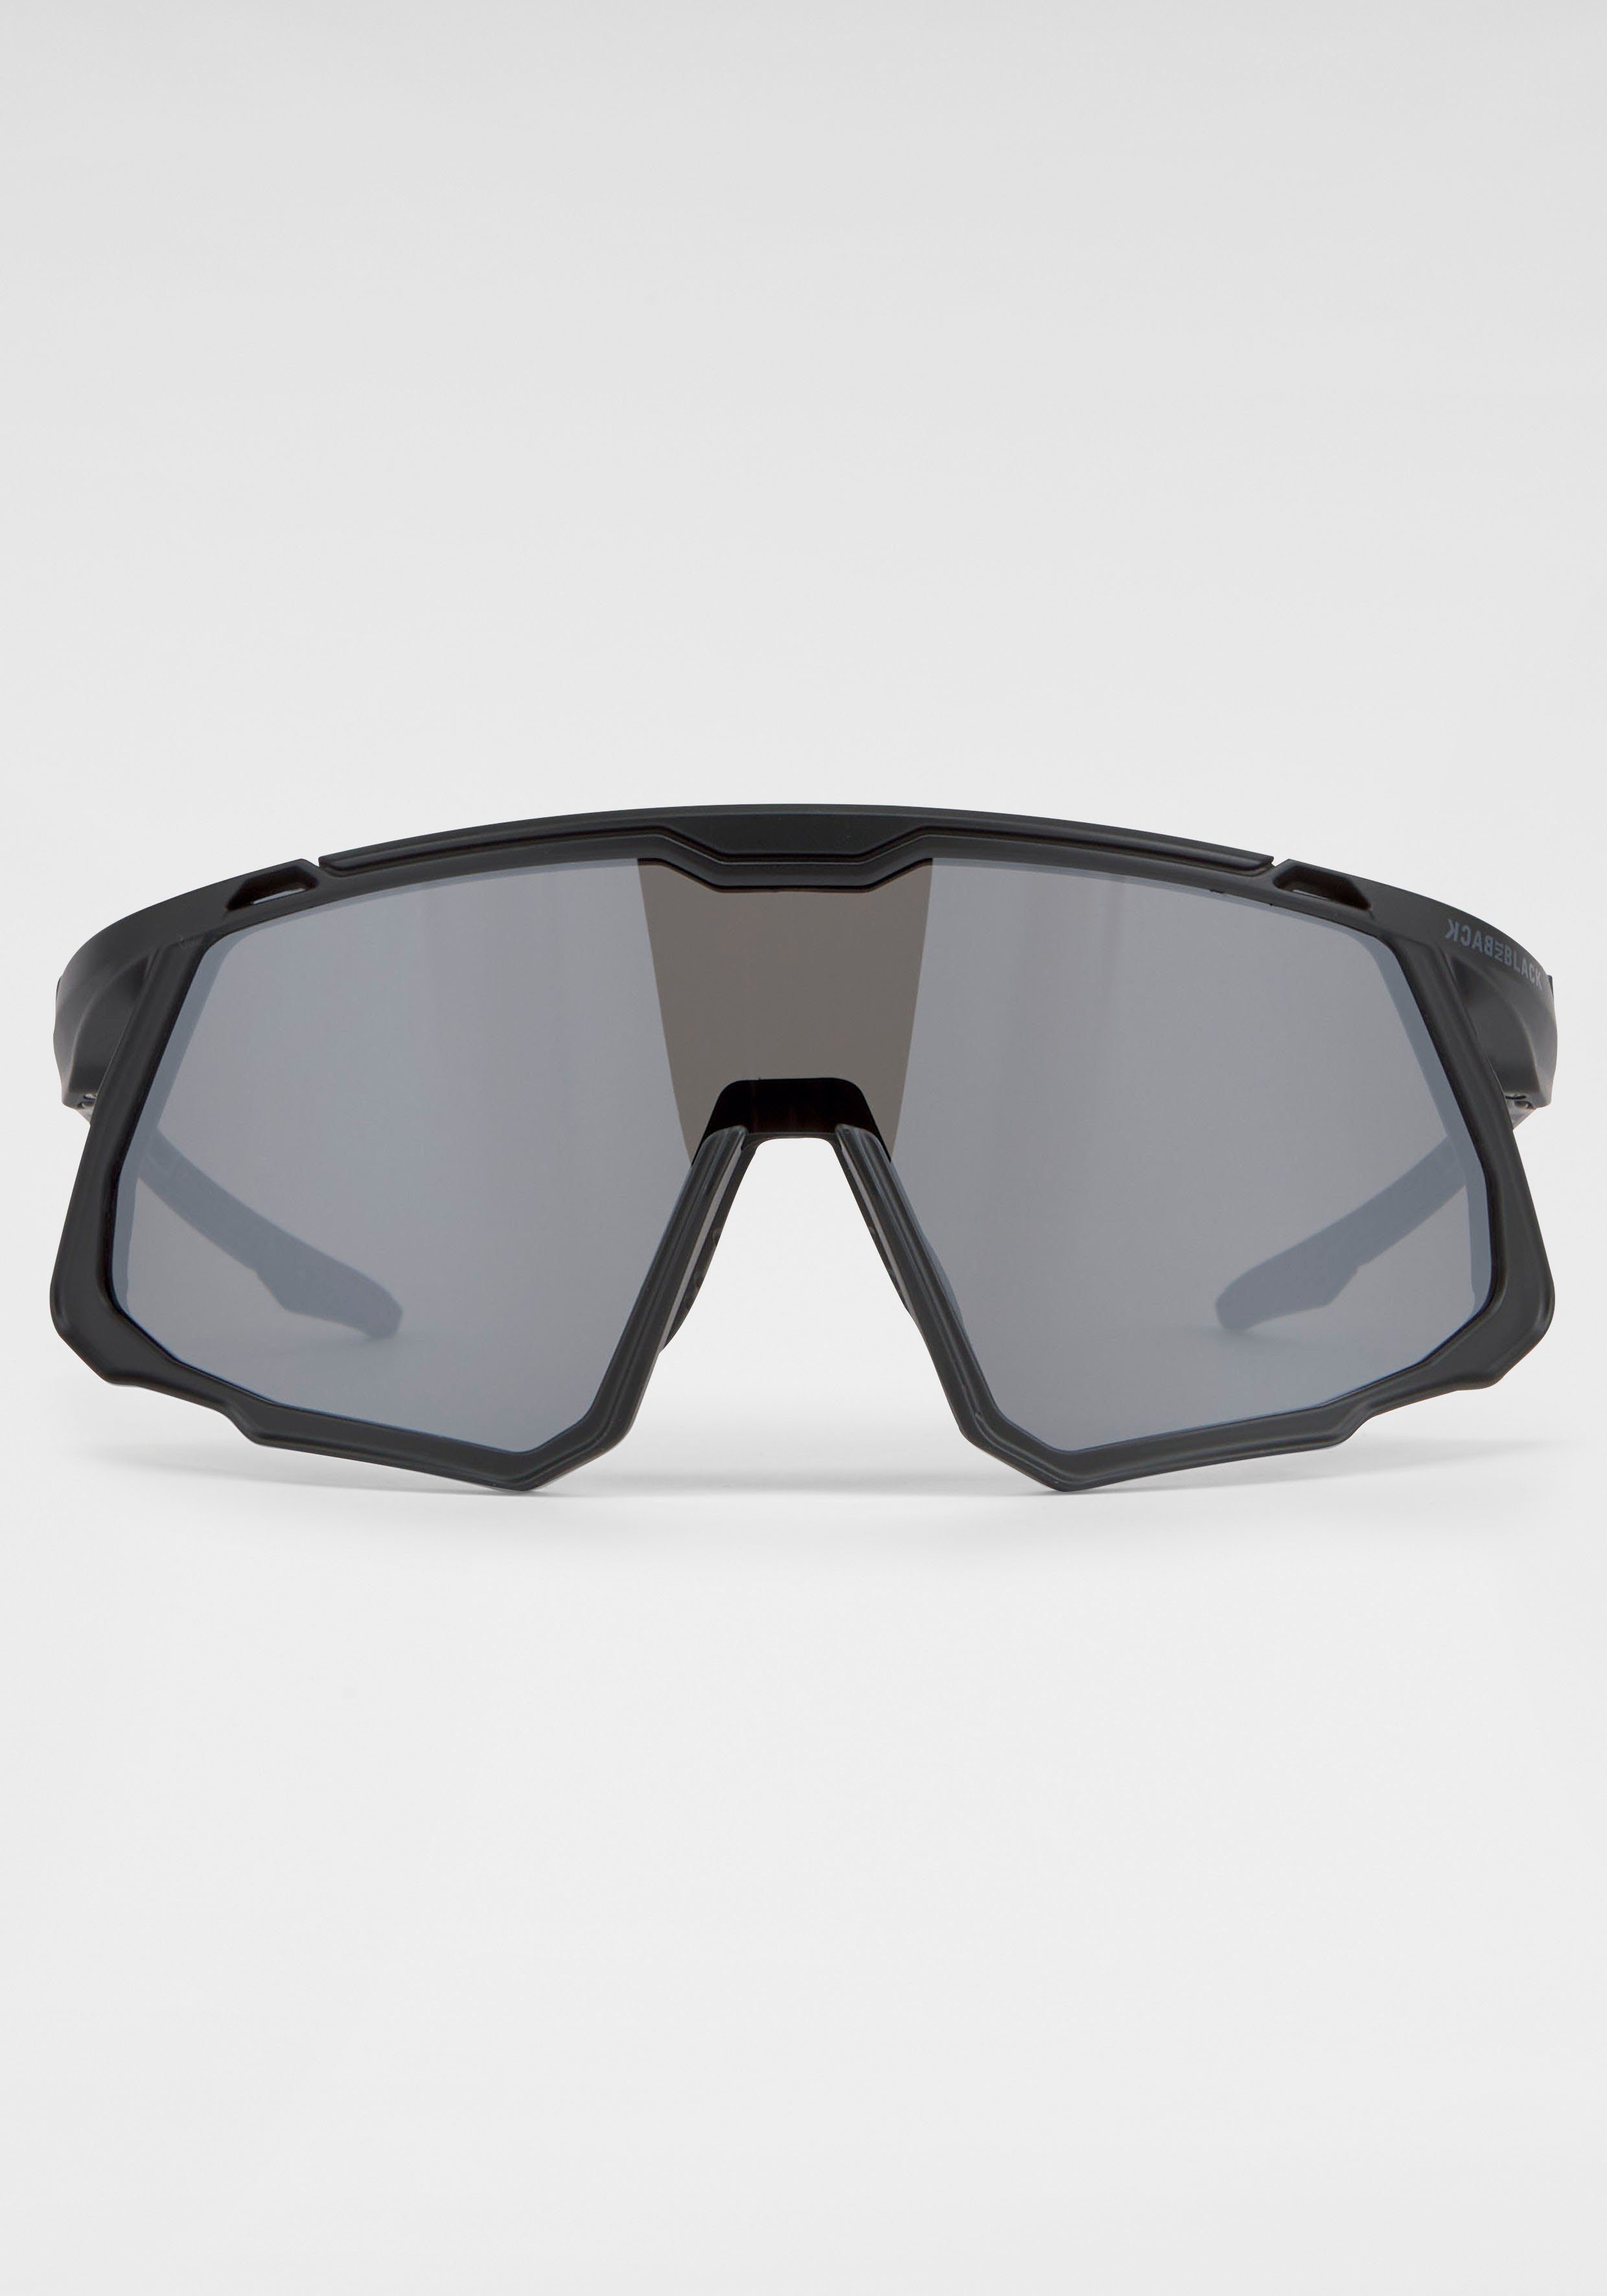 BACK IN BLACK gebogene schwarz Sonnenbrille Eyewear Form